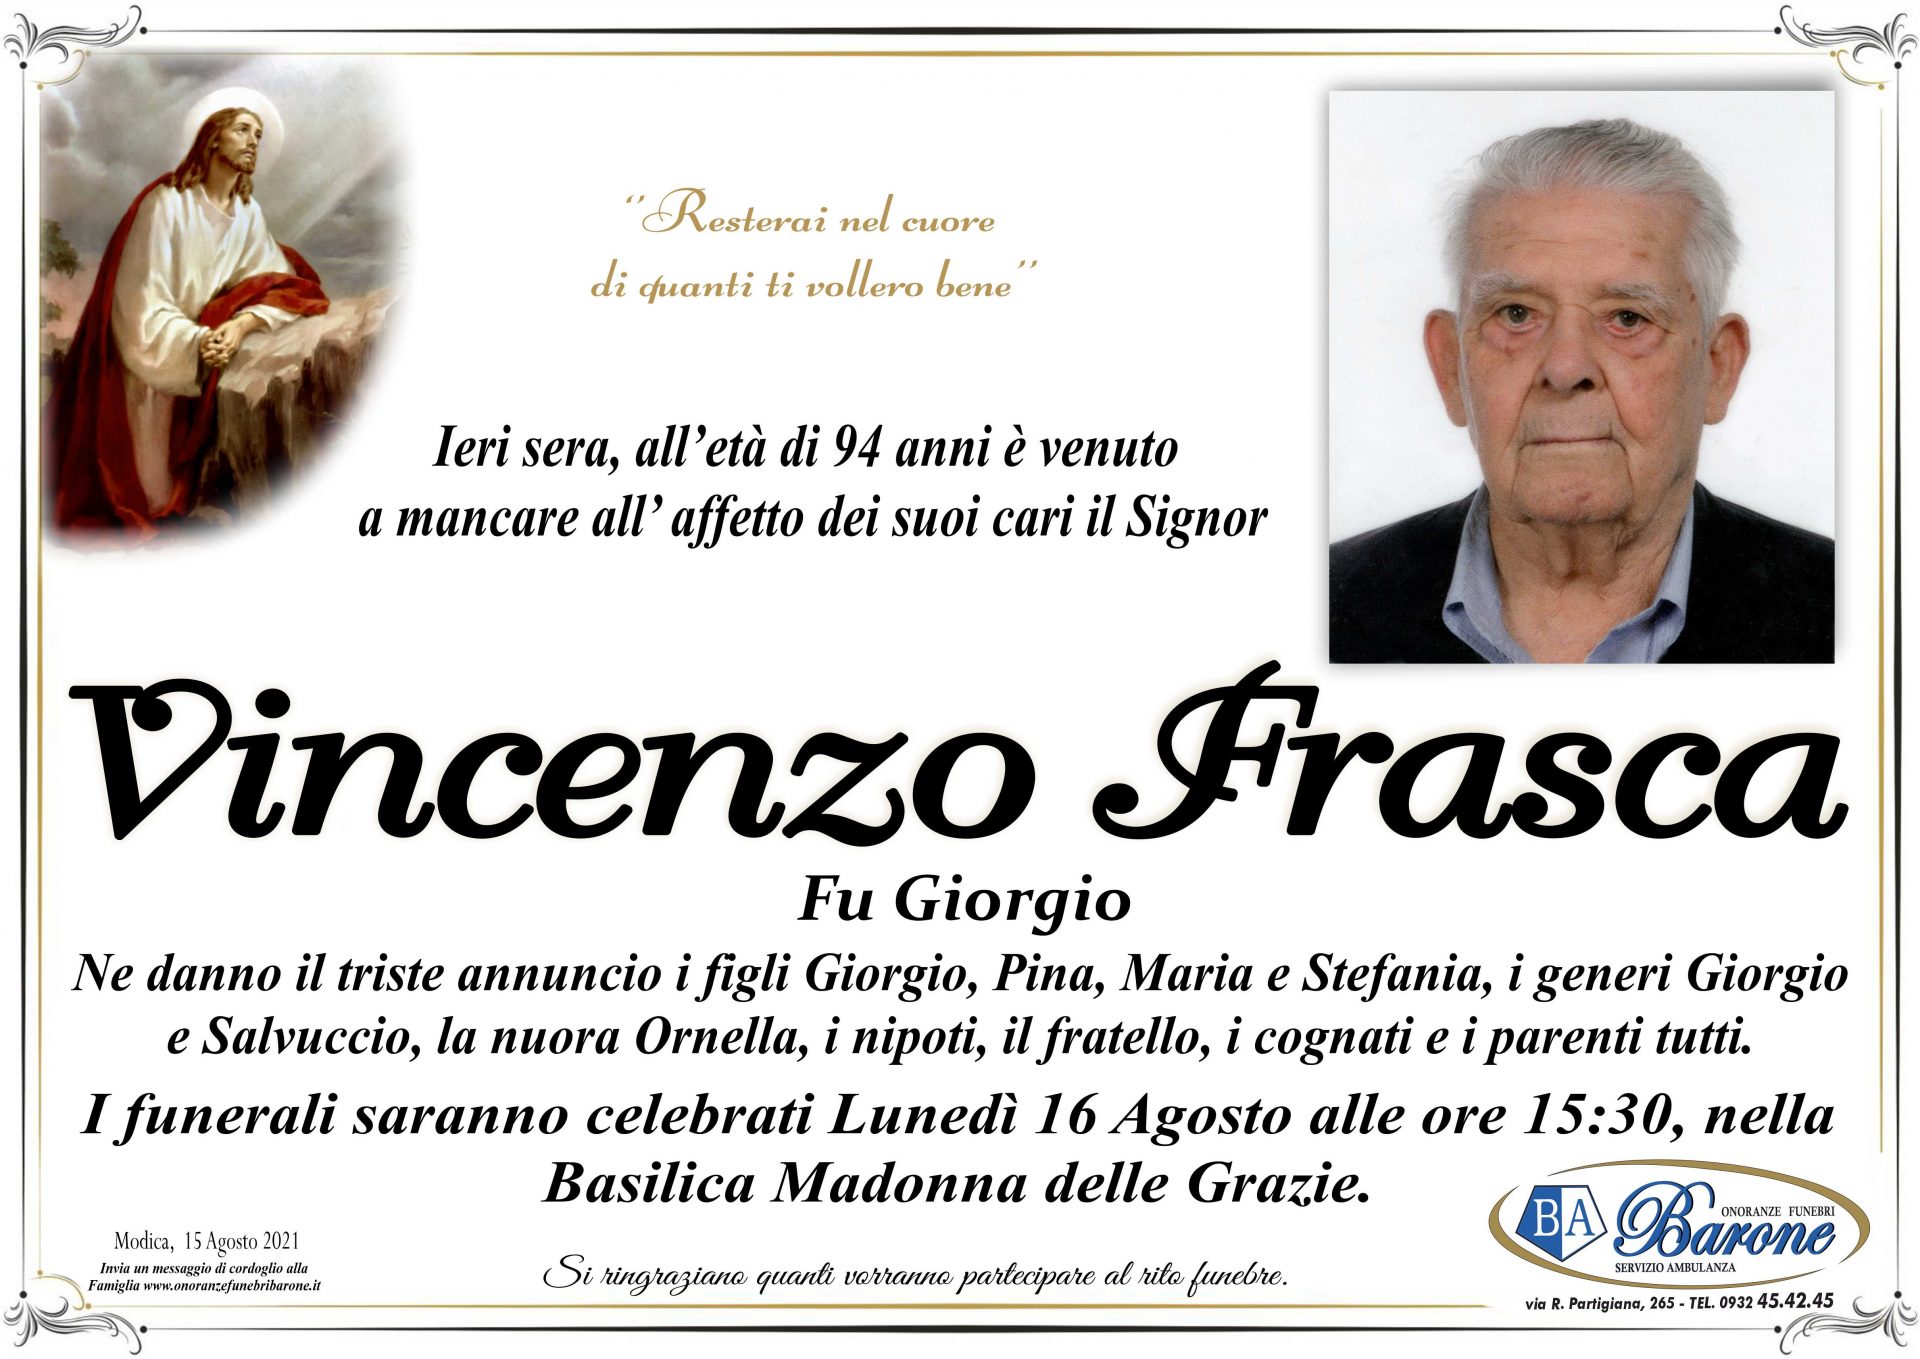 Vincenzo Frasca